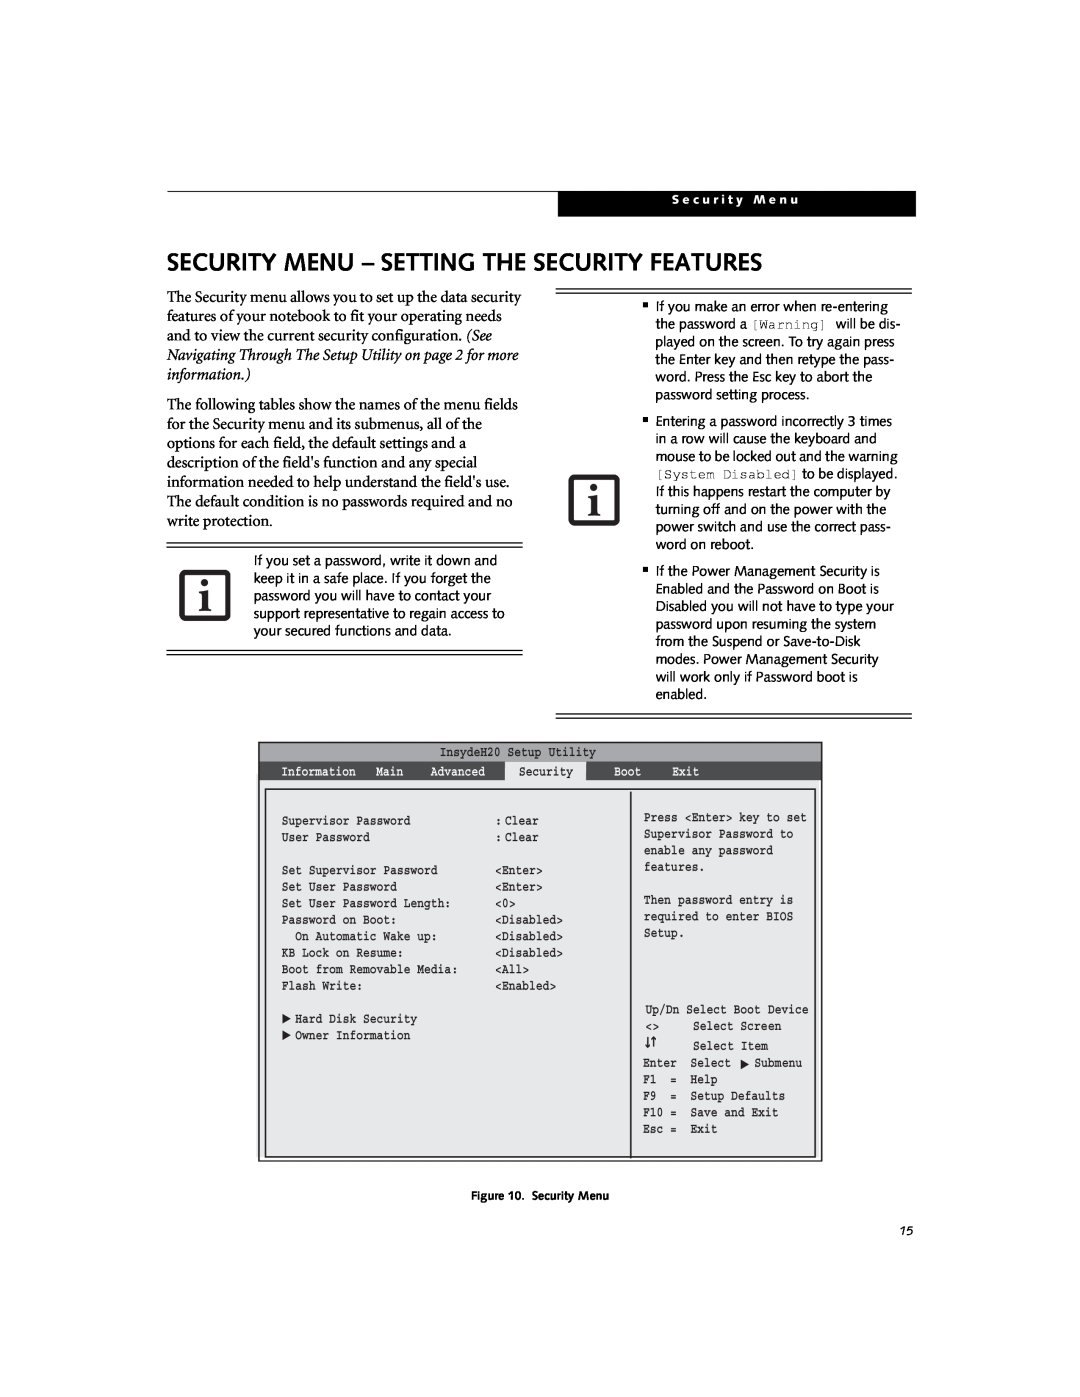 Fujitsu N3530 manual Security Menu - Setting The Security Features, S e c u r i t y M e n u 